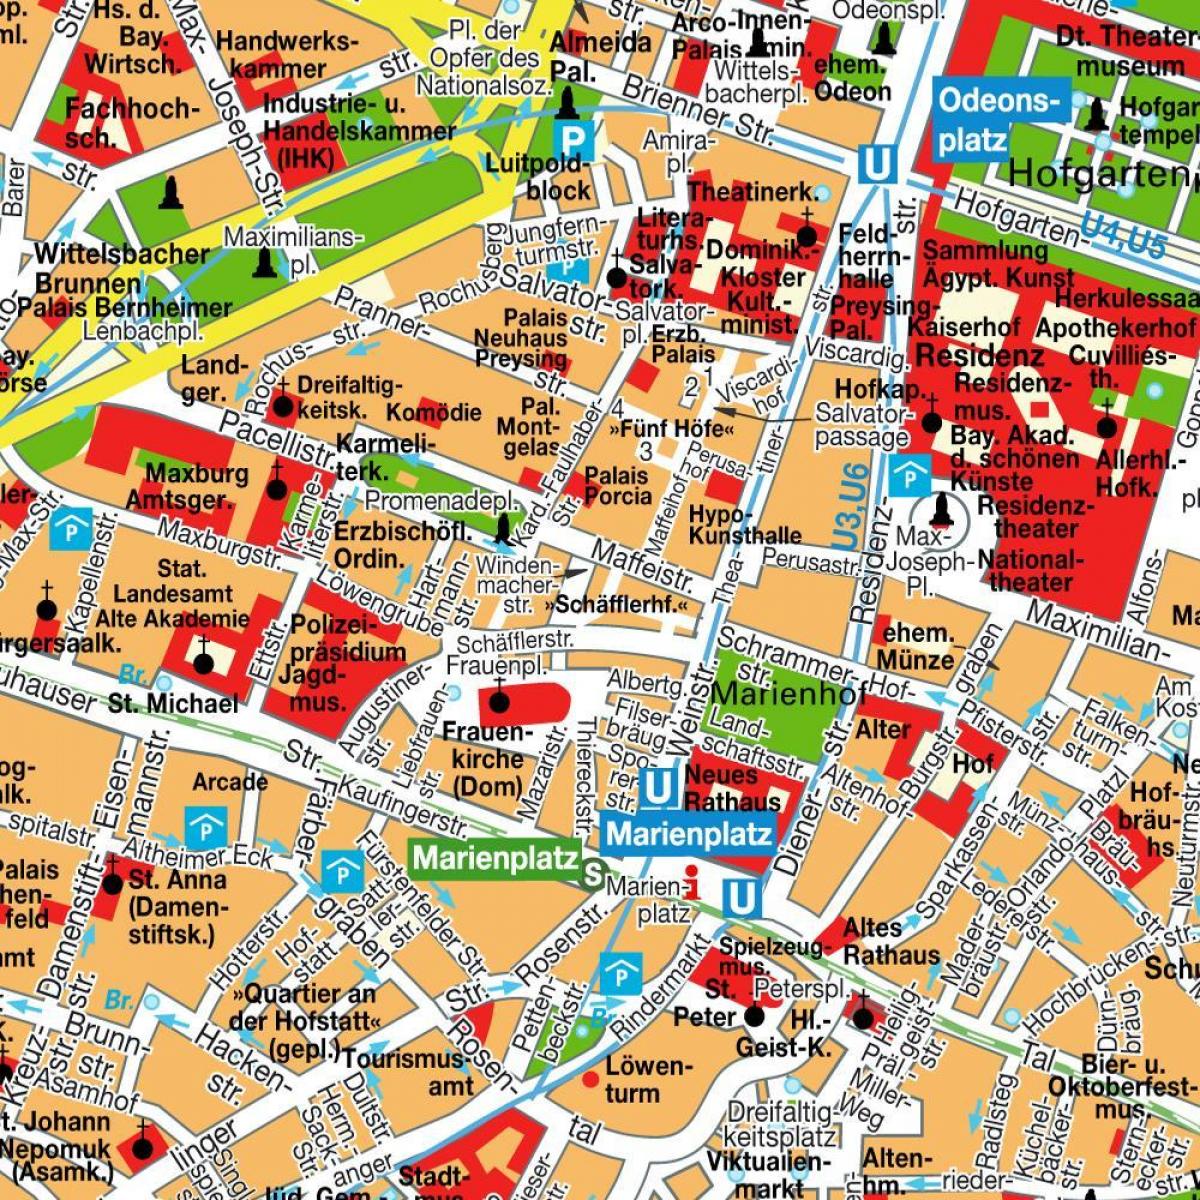 street kart over münchen sentrum